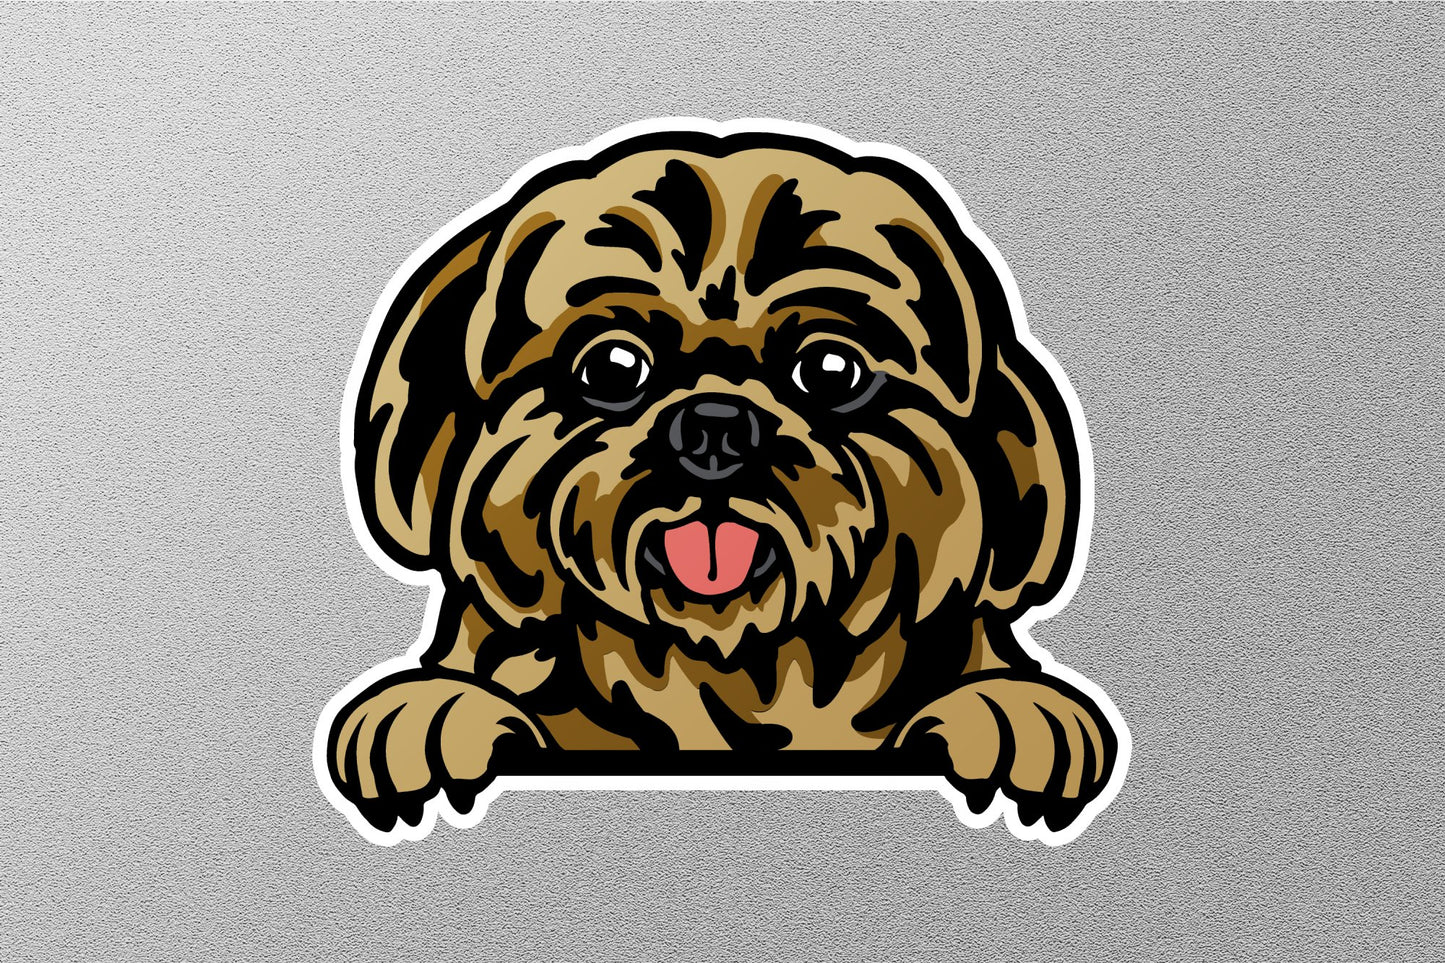 Shih Tzu Dog Sticker